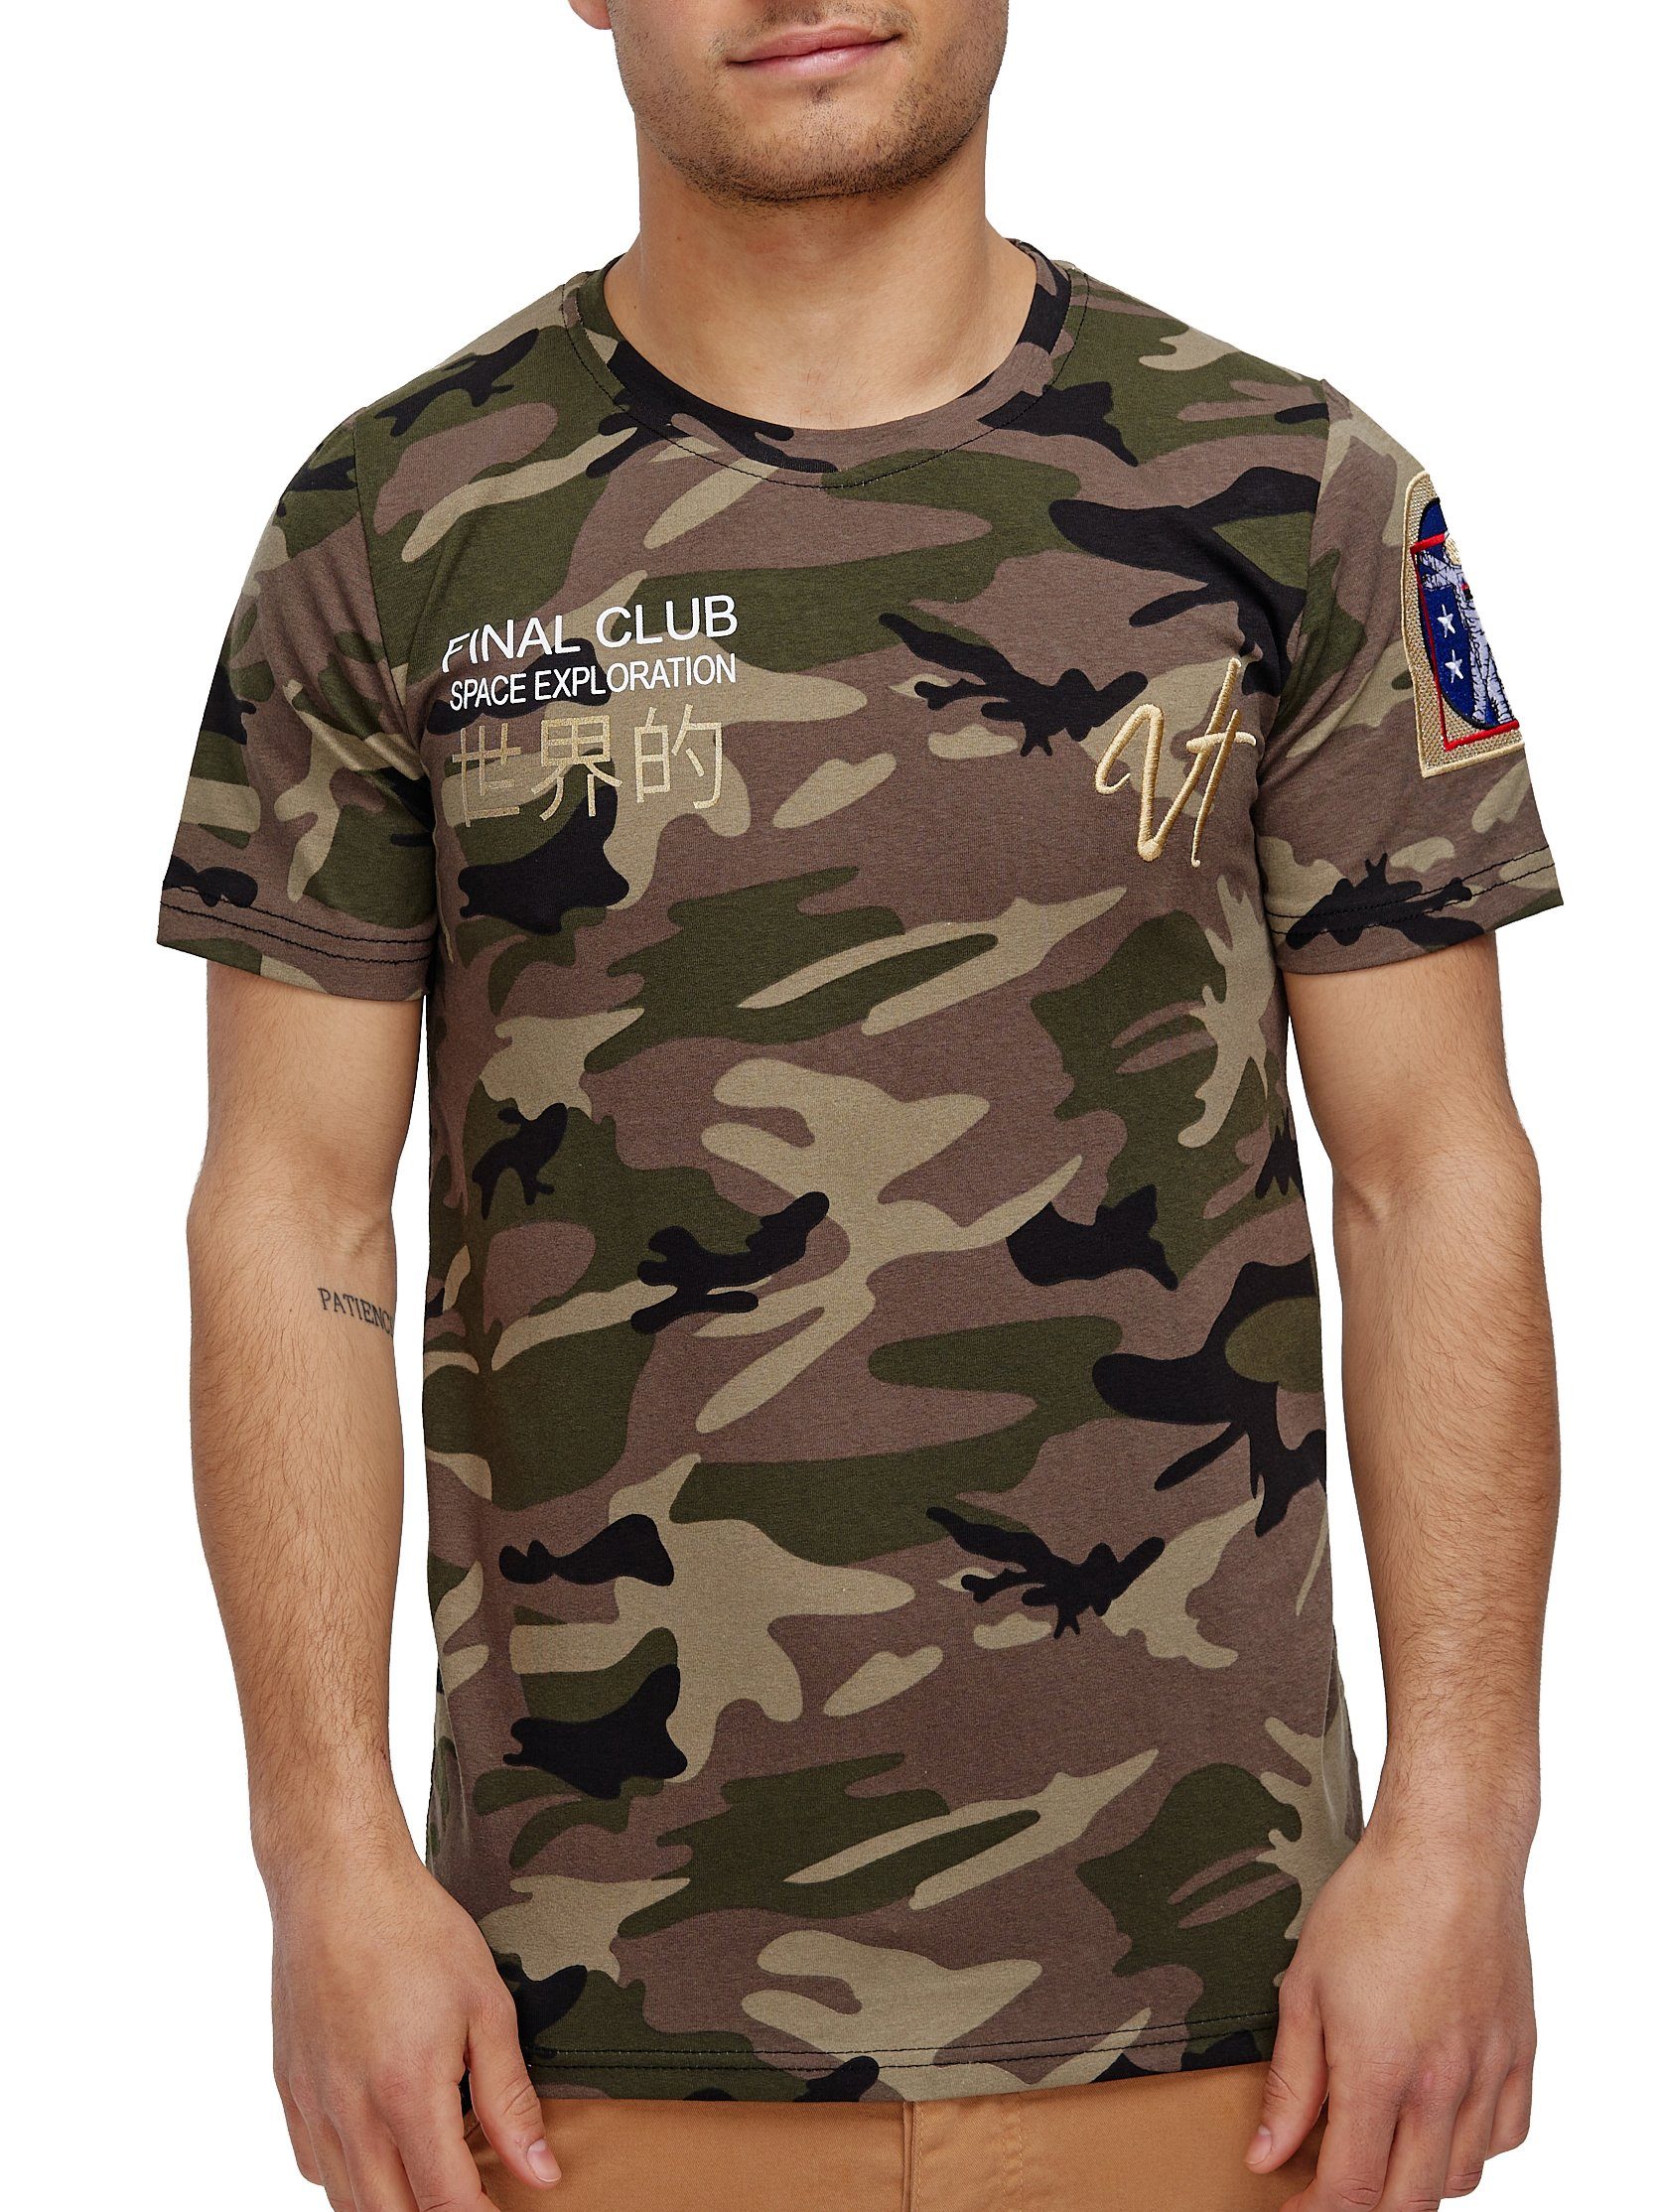 Herren T-Shirt Kurzarm Rundhals Camouflage Sweatshirt Outdoor Tarnfarben TShirt 